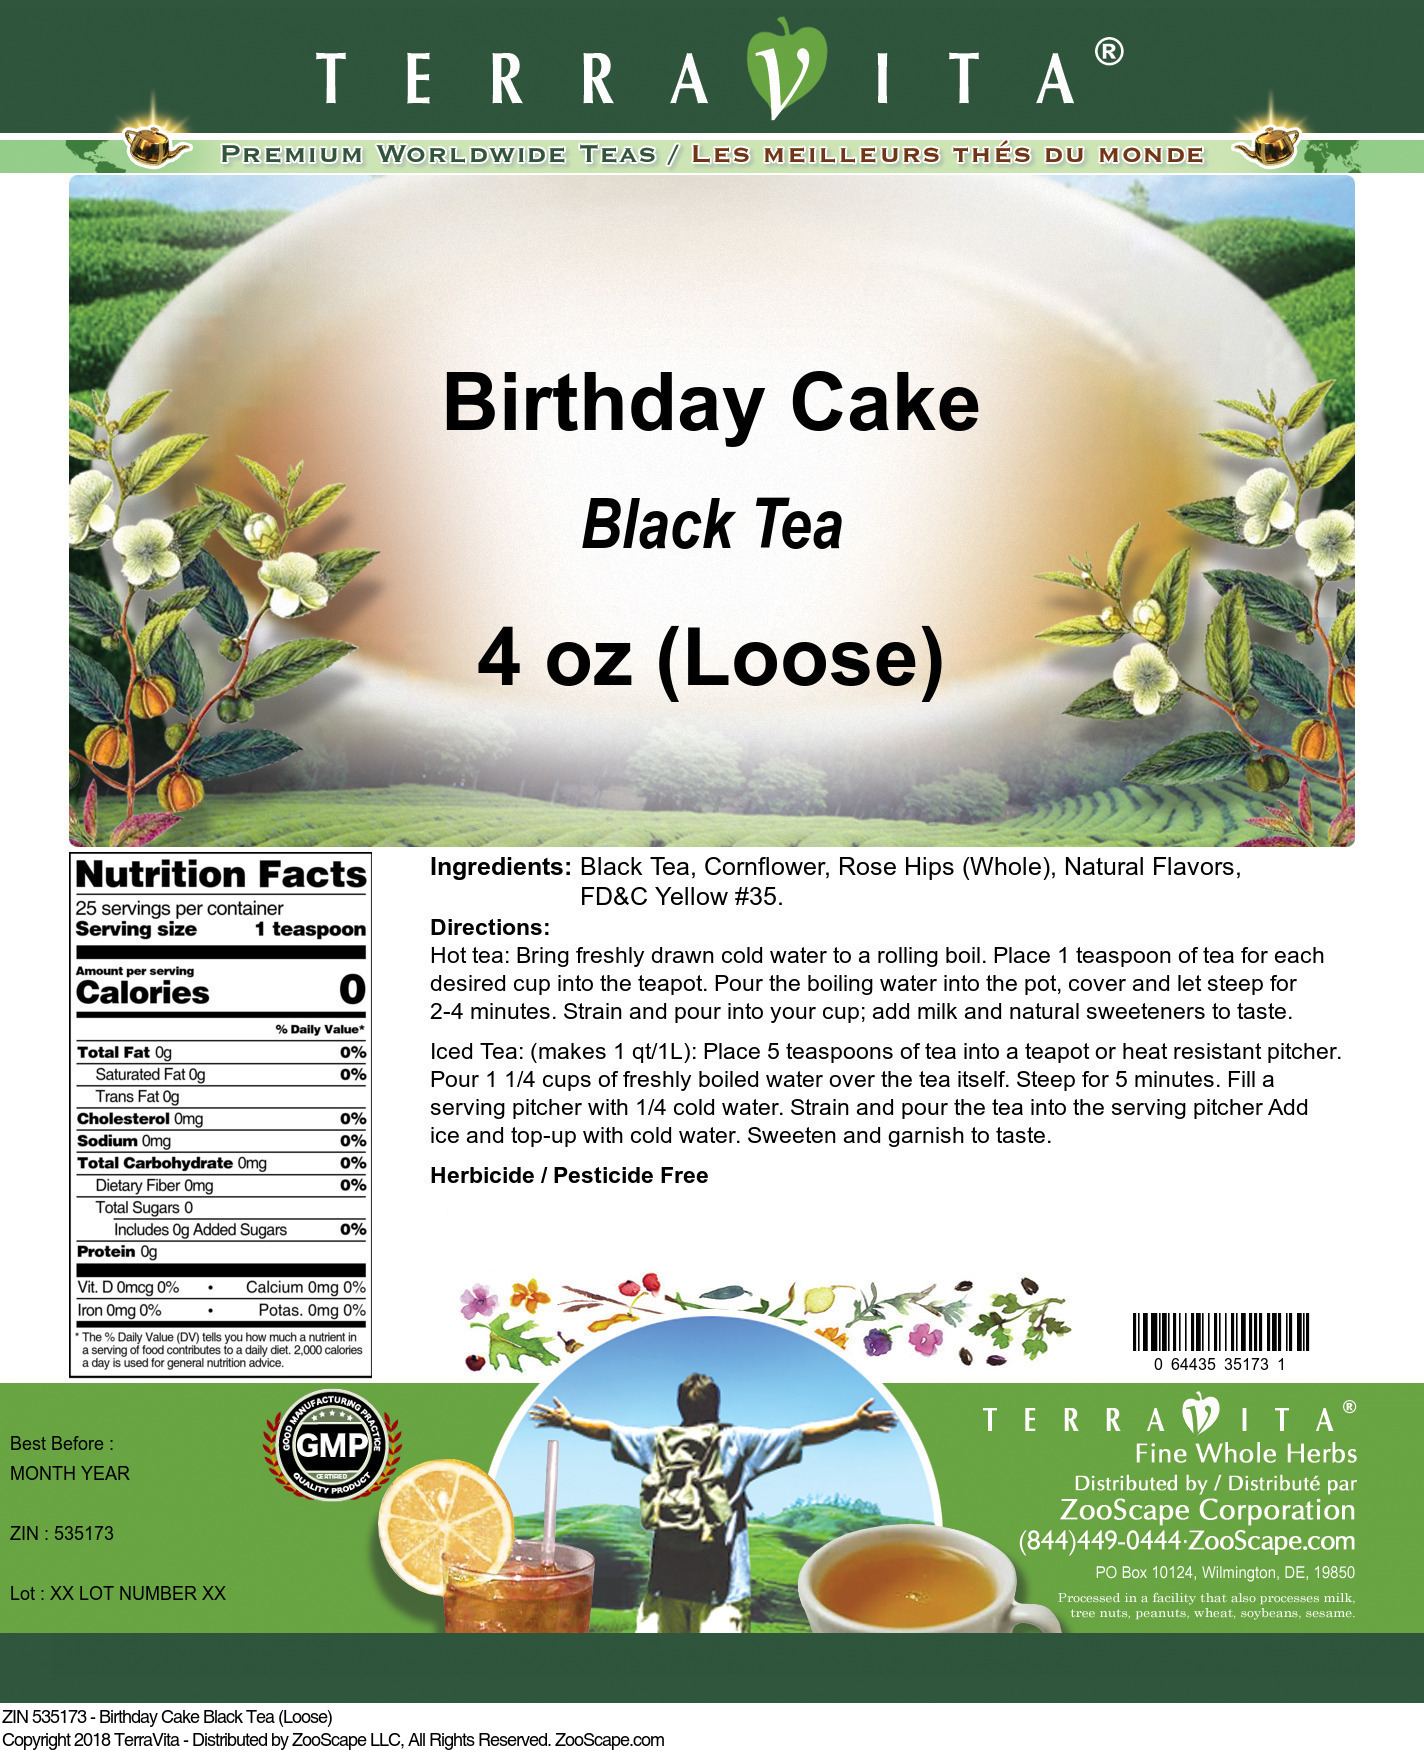 Birthday Cake Black Tea (Loose) - Label